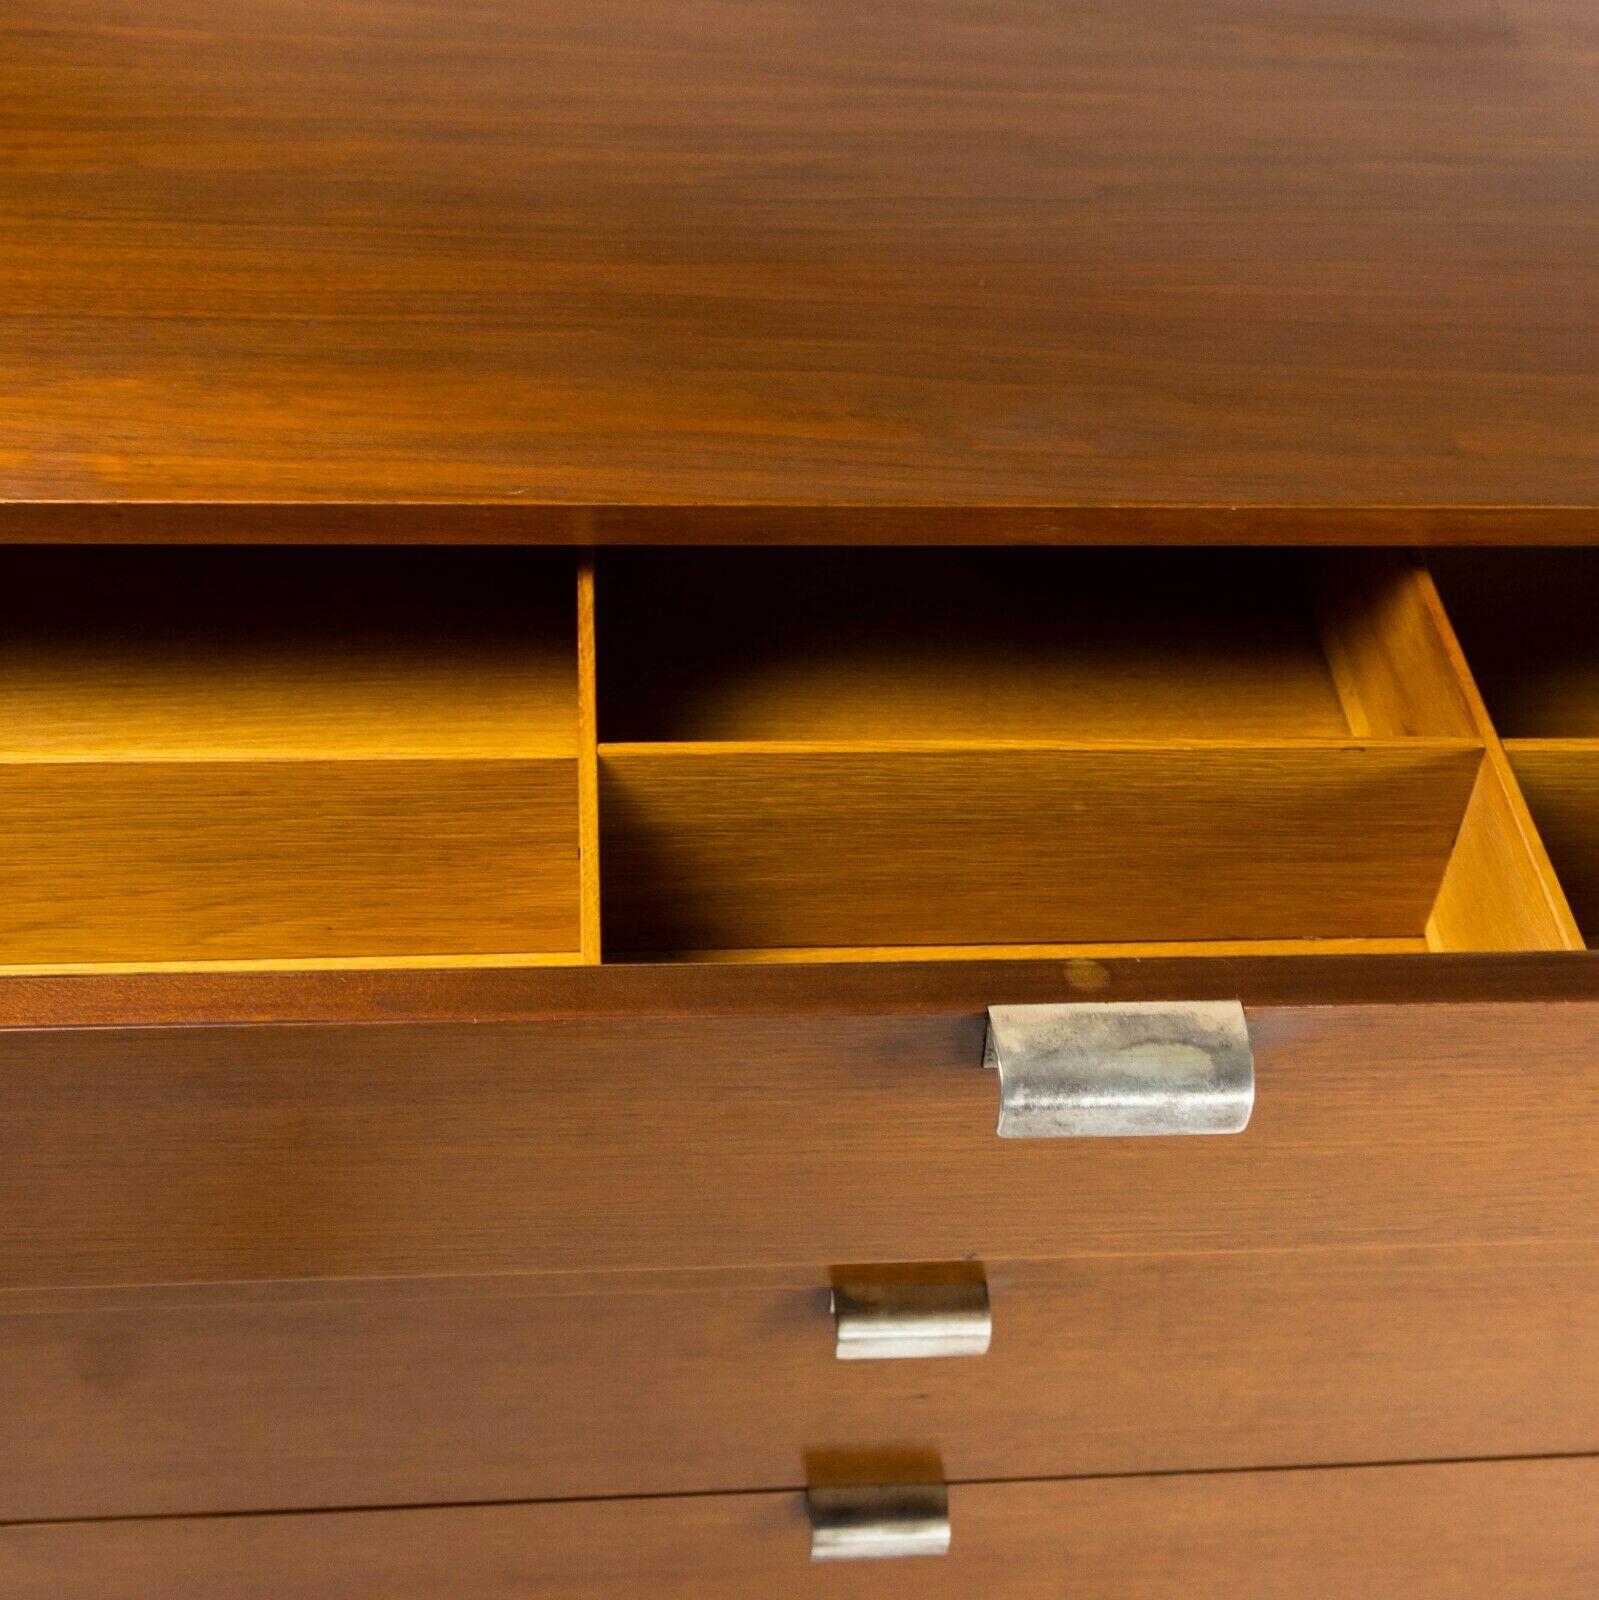 1954 George Nelson Herman Miller Basic Cabinet Series 4936 Credenza / Dresser